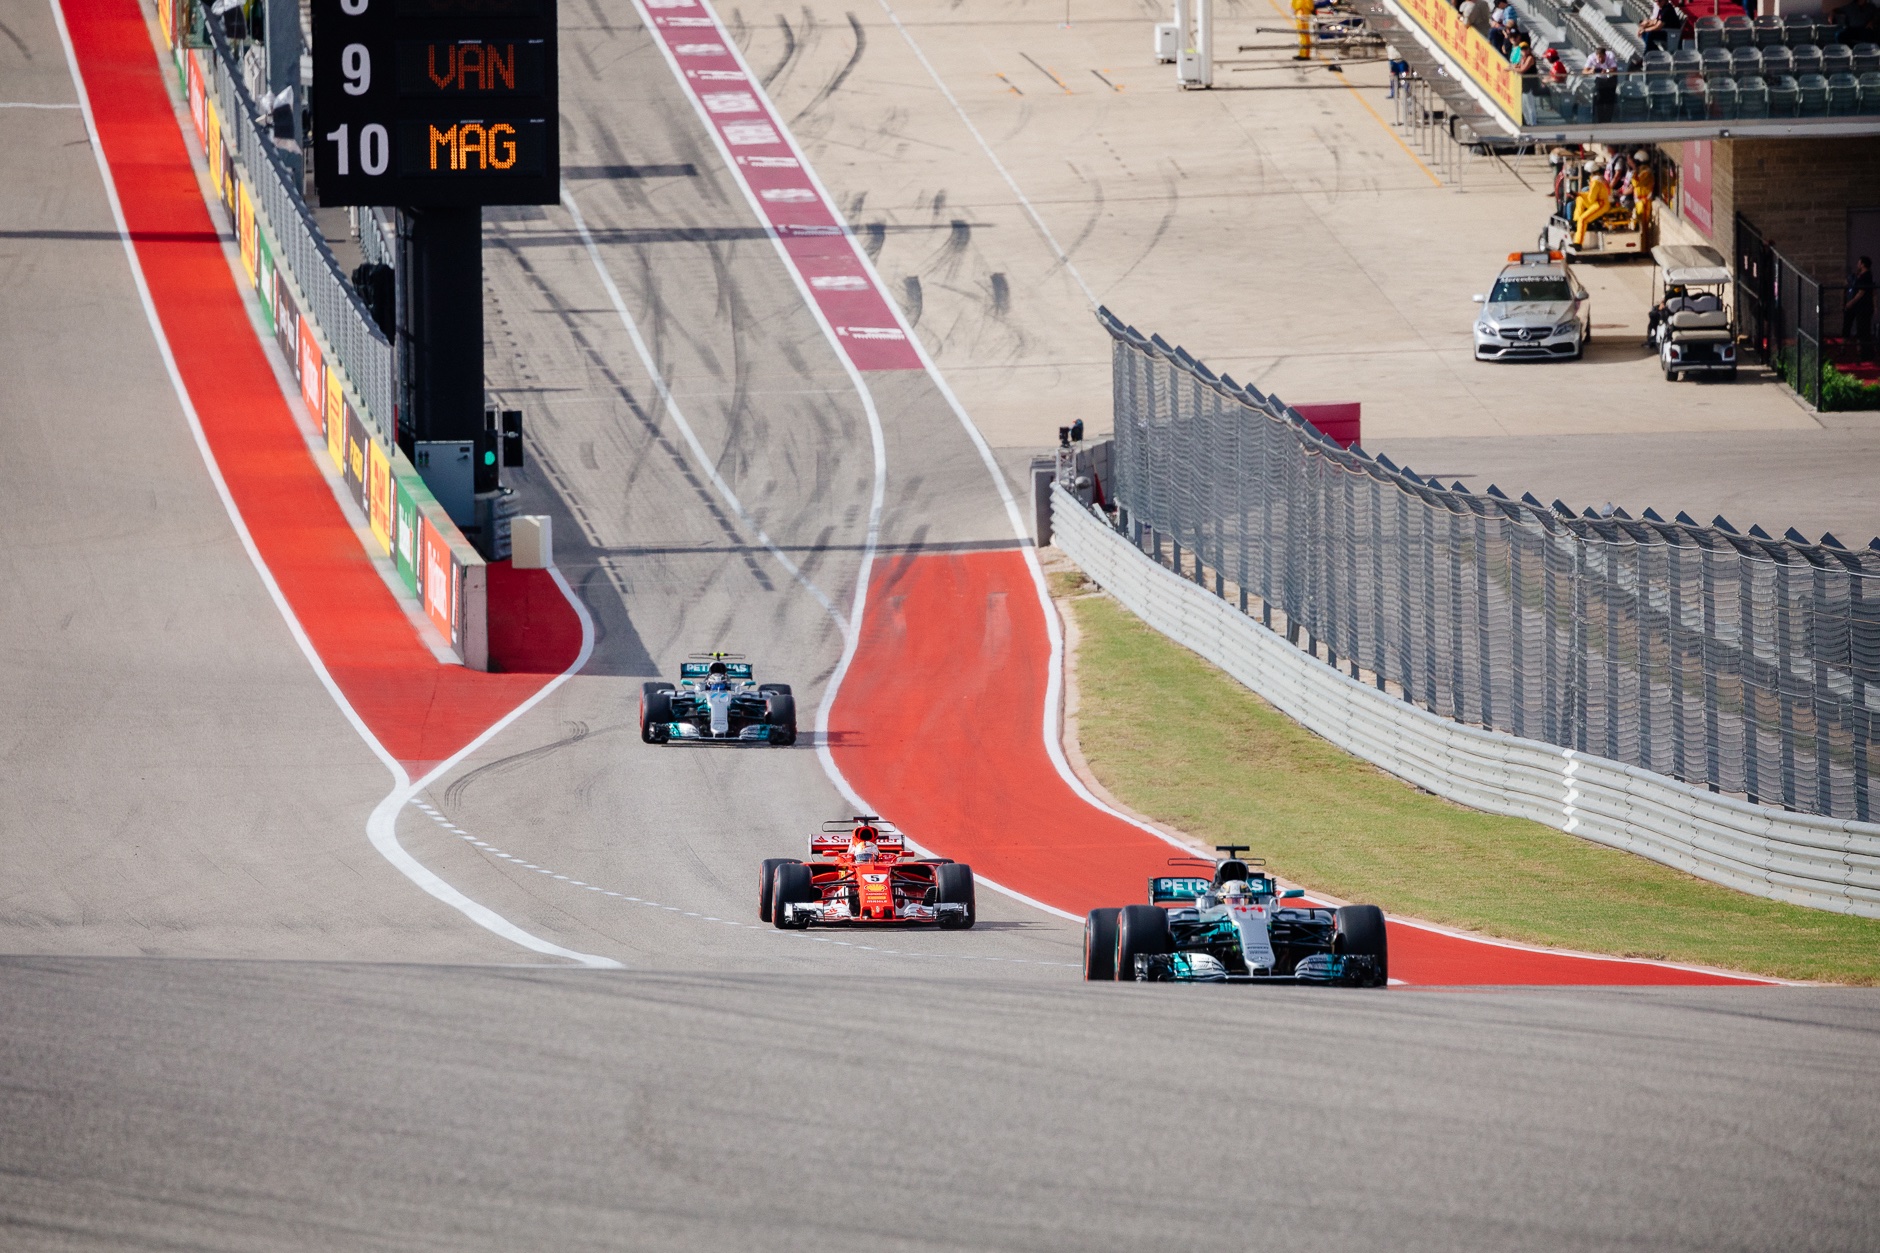 Lewis Hamilton, Sebastian Vettel, and Valtteri Bottas exist pit row to begin their qualifying session.